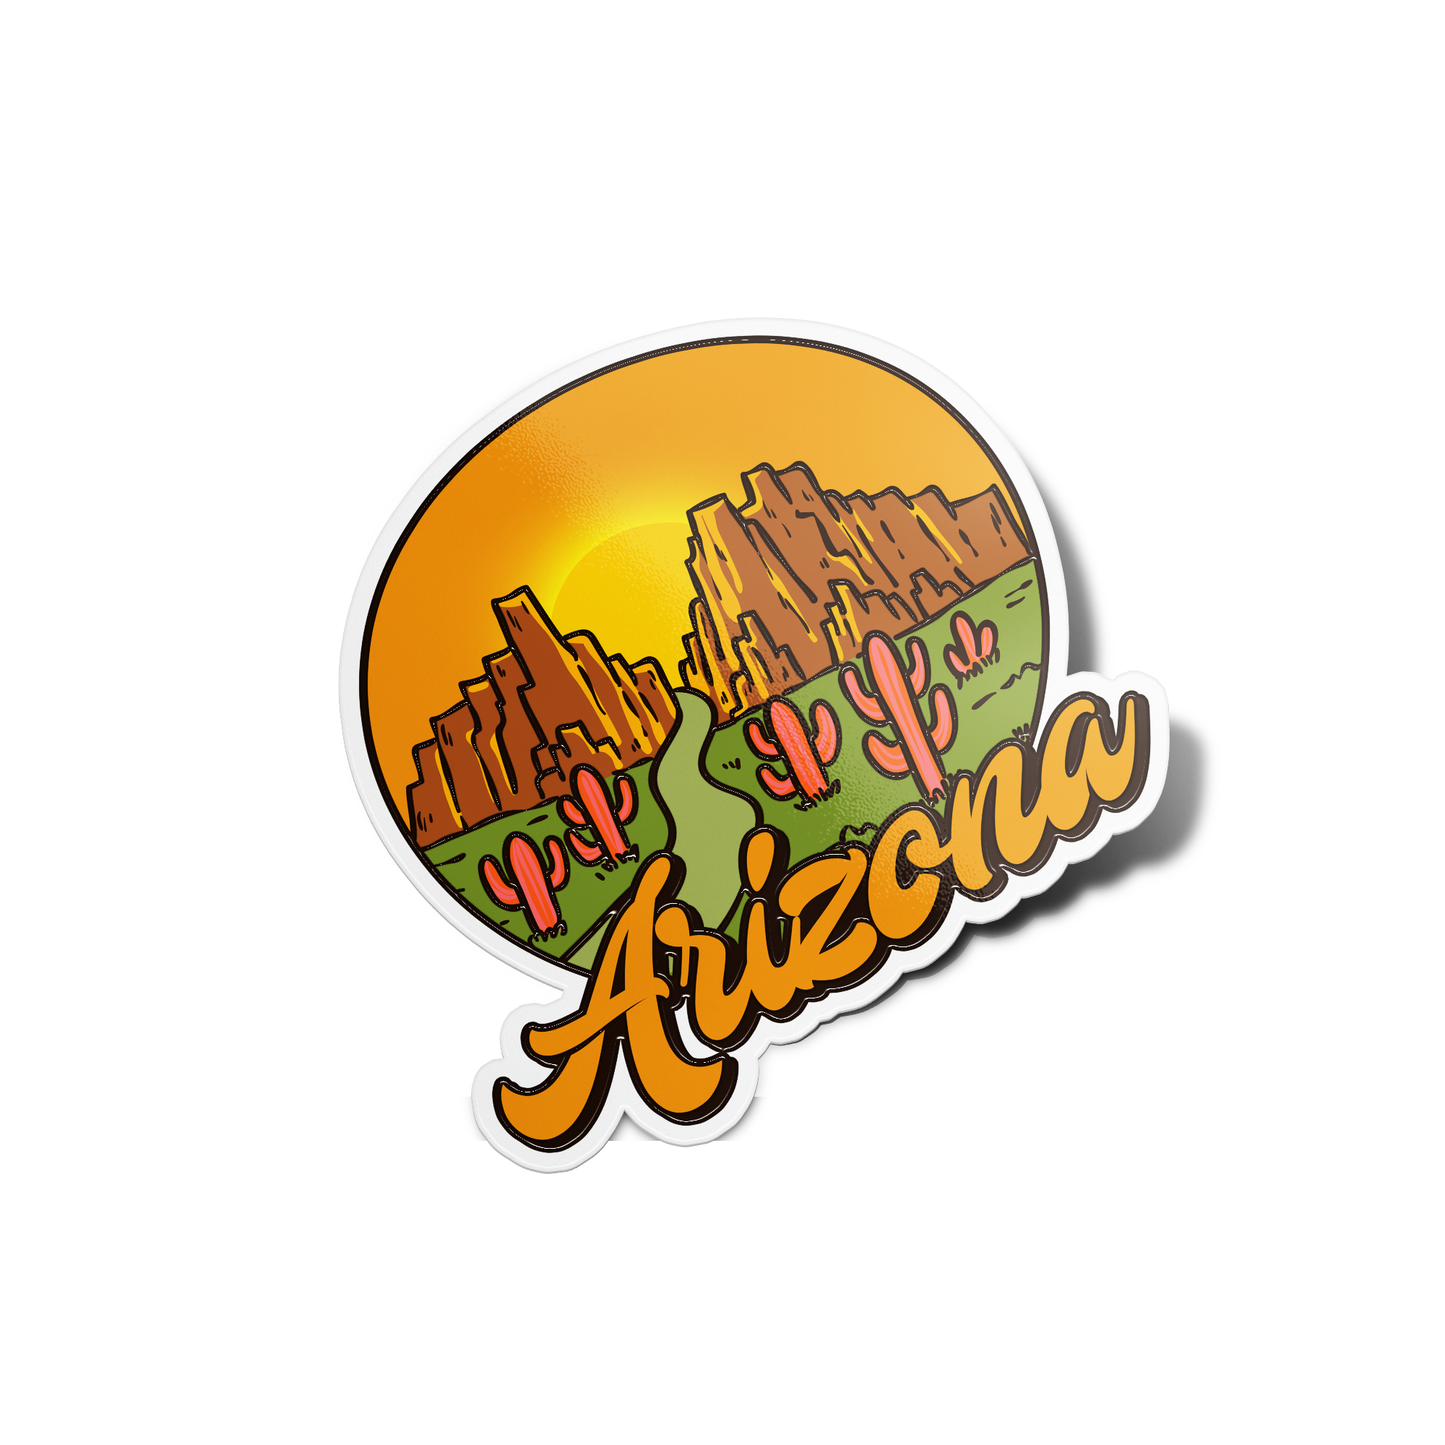 Arizona Nature Sticker